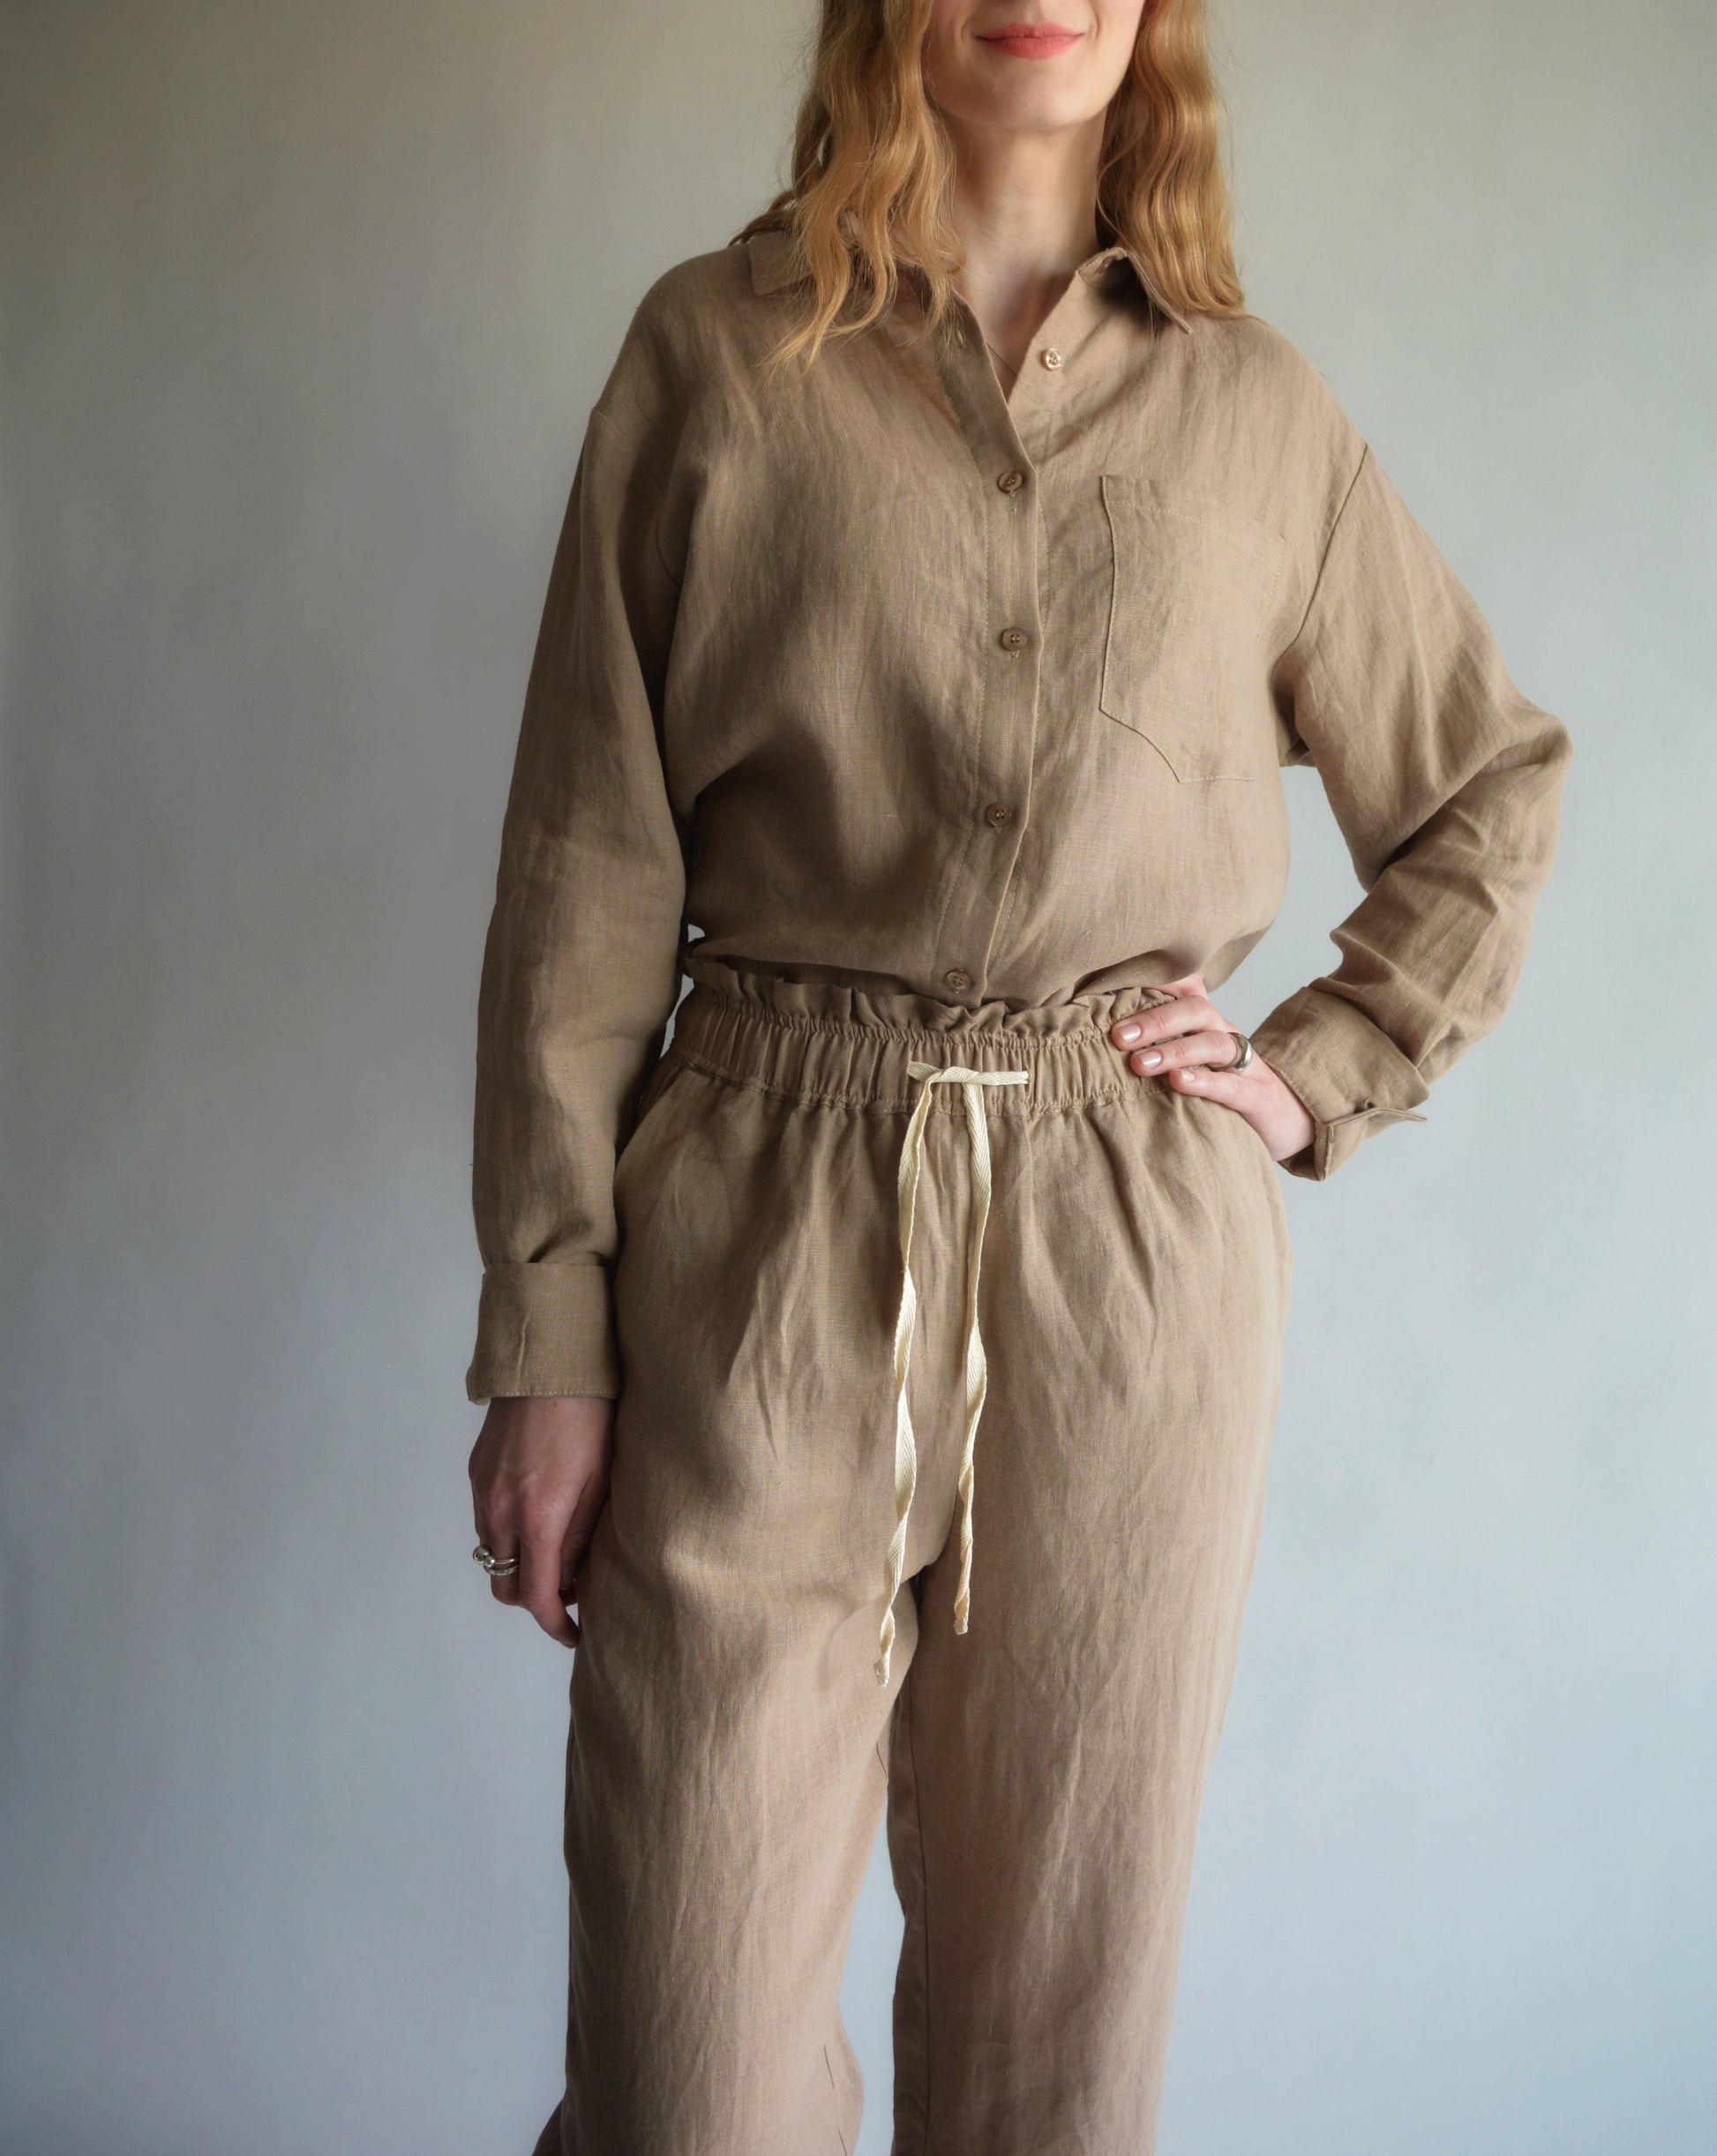 100% European Linen Sleepwear Set (pajama set) in brown color